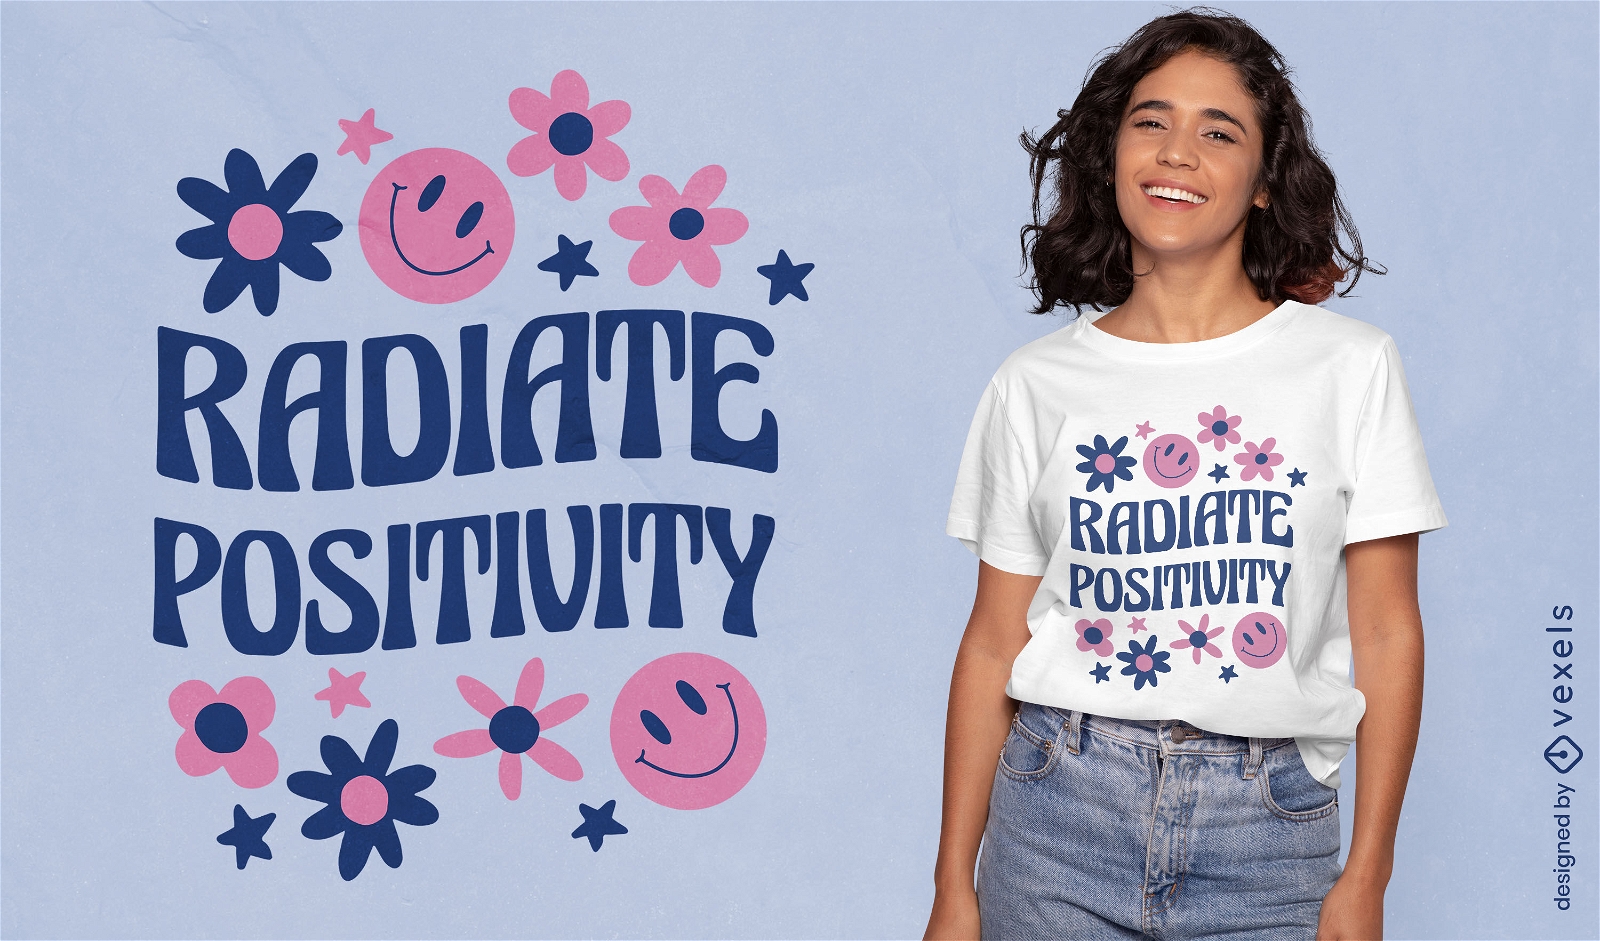 Irradiar dise?o de camiseta motivacional de positividad.